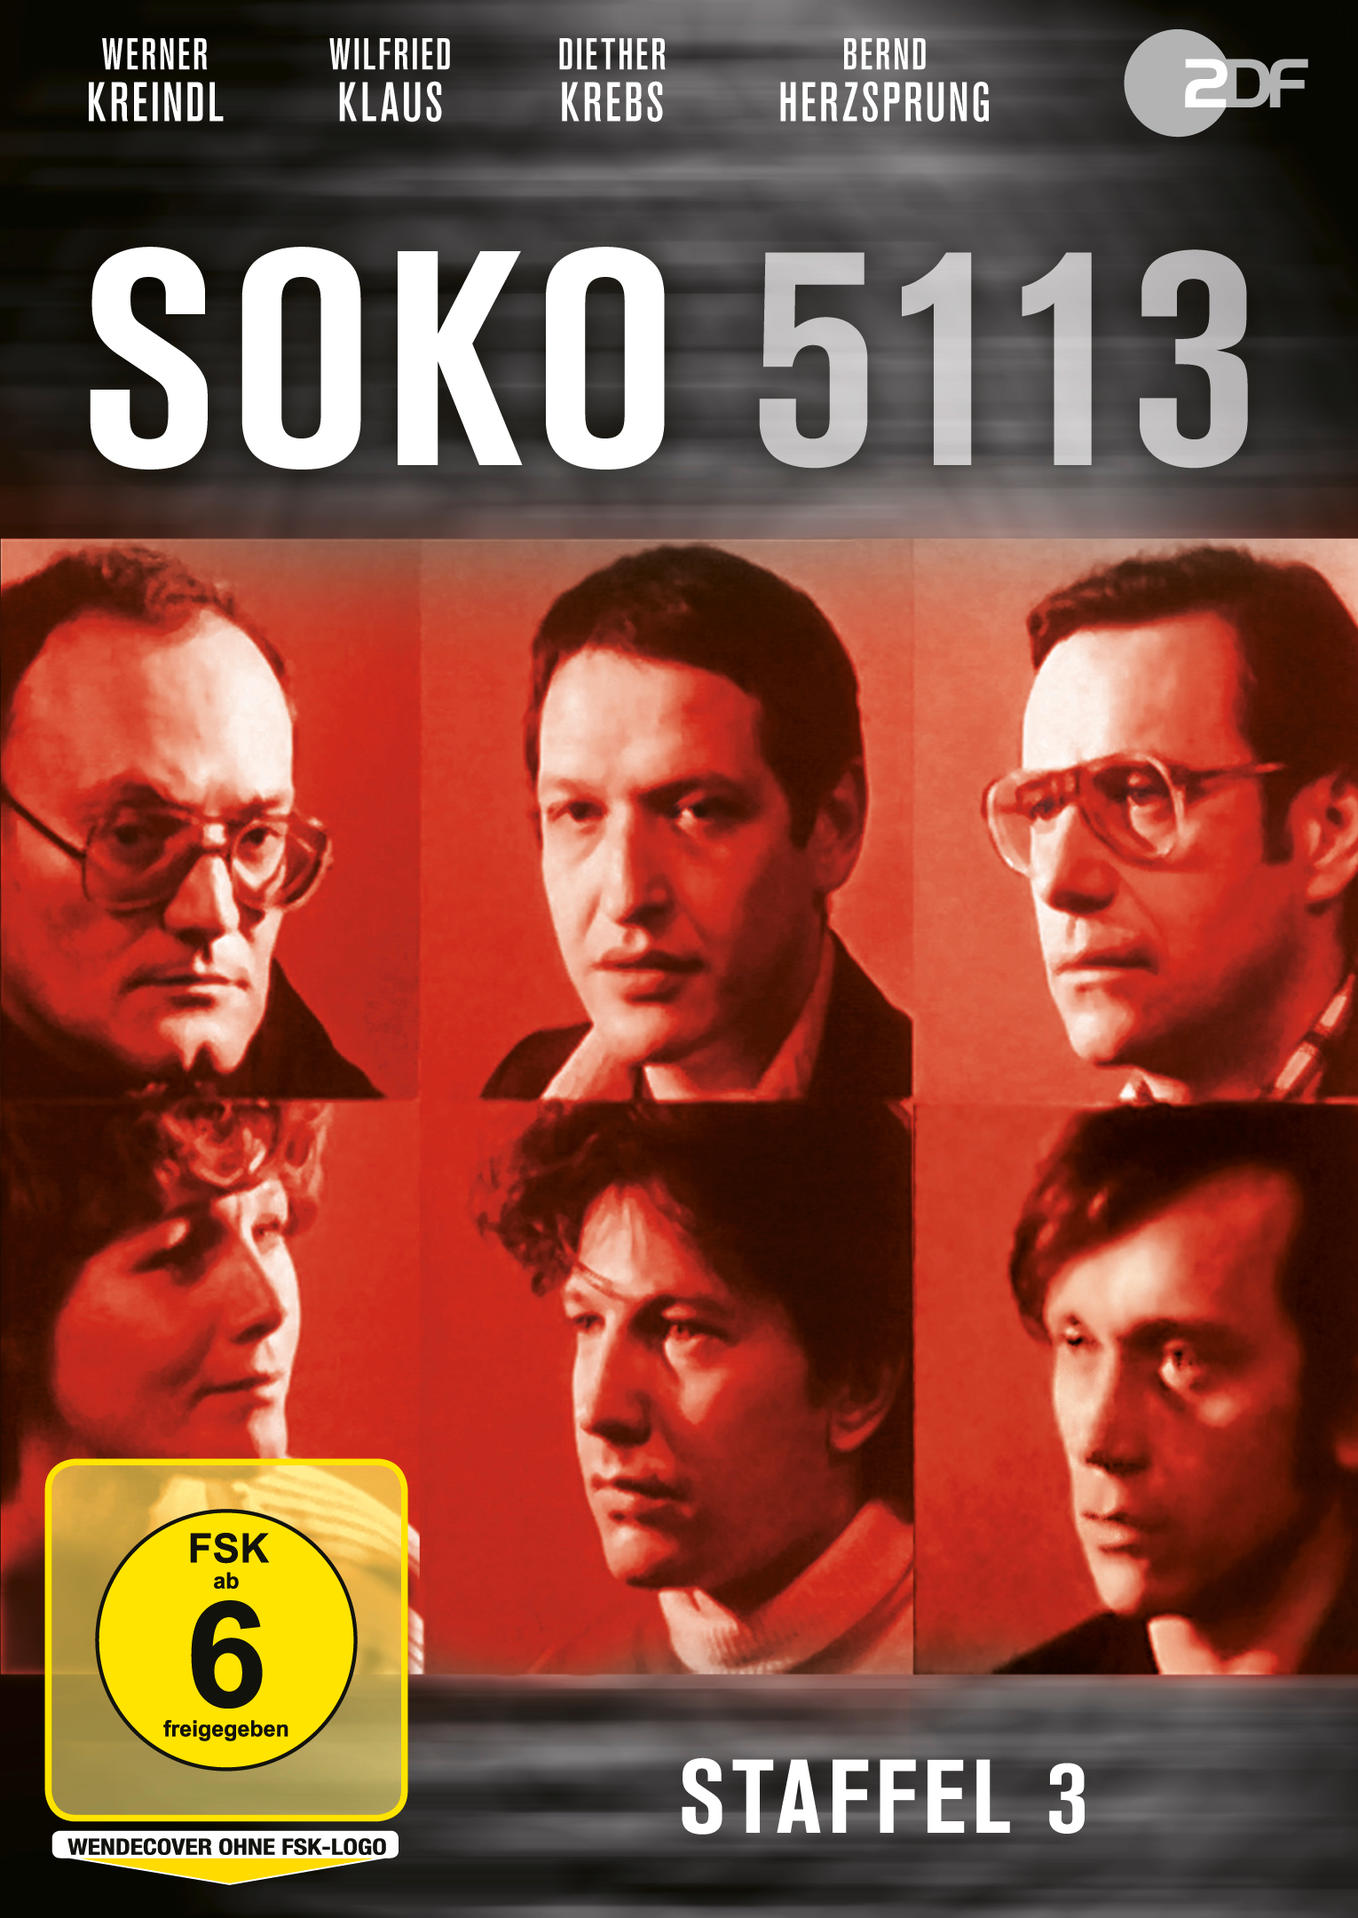 SOKO 3 - DVD 5113 Staffel